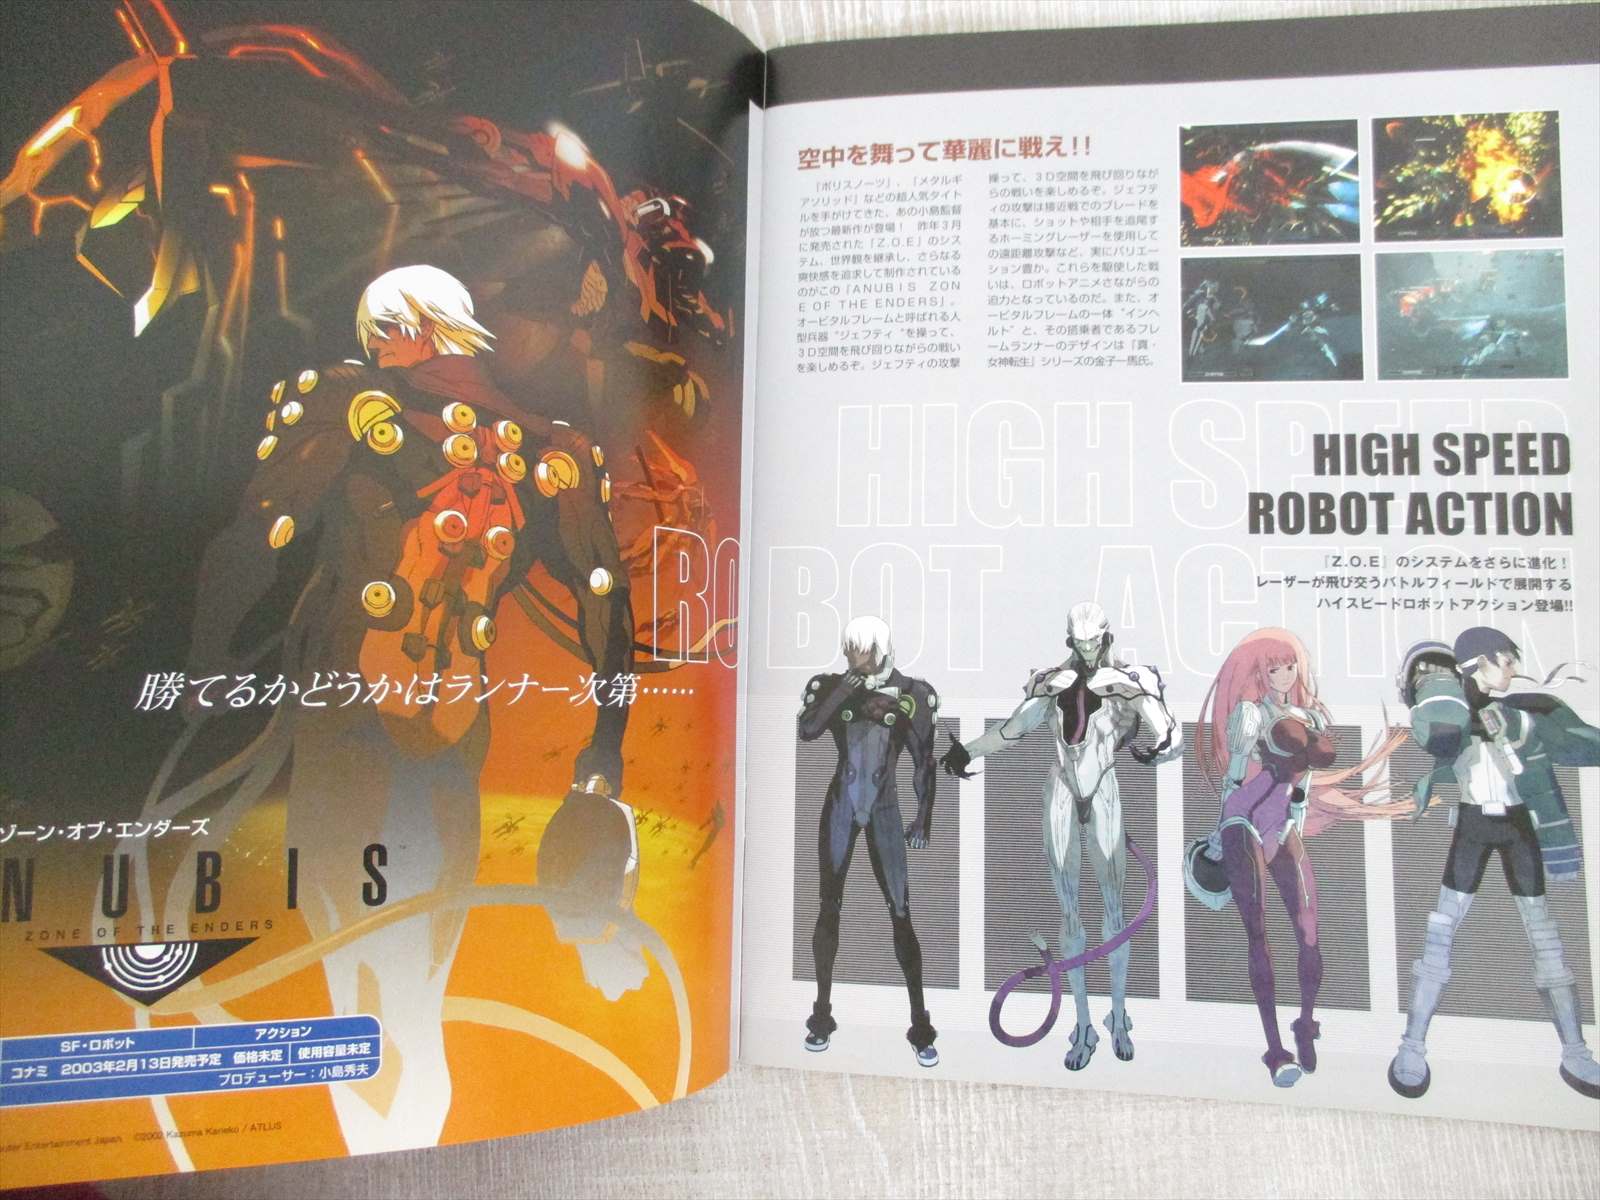 Famitsu Wave Dvd 12 02 W Dvd Game Guide Art Book Anubis Guilty Gear Xx Eb Ebay